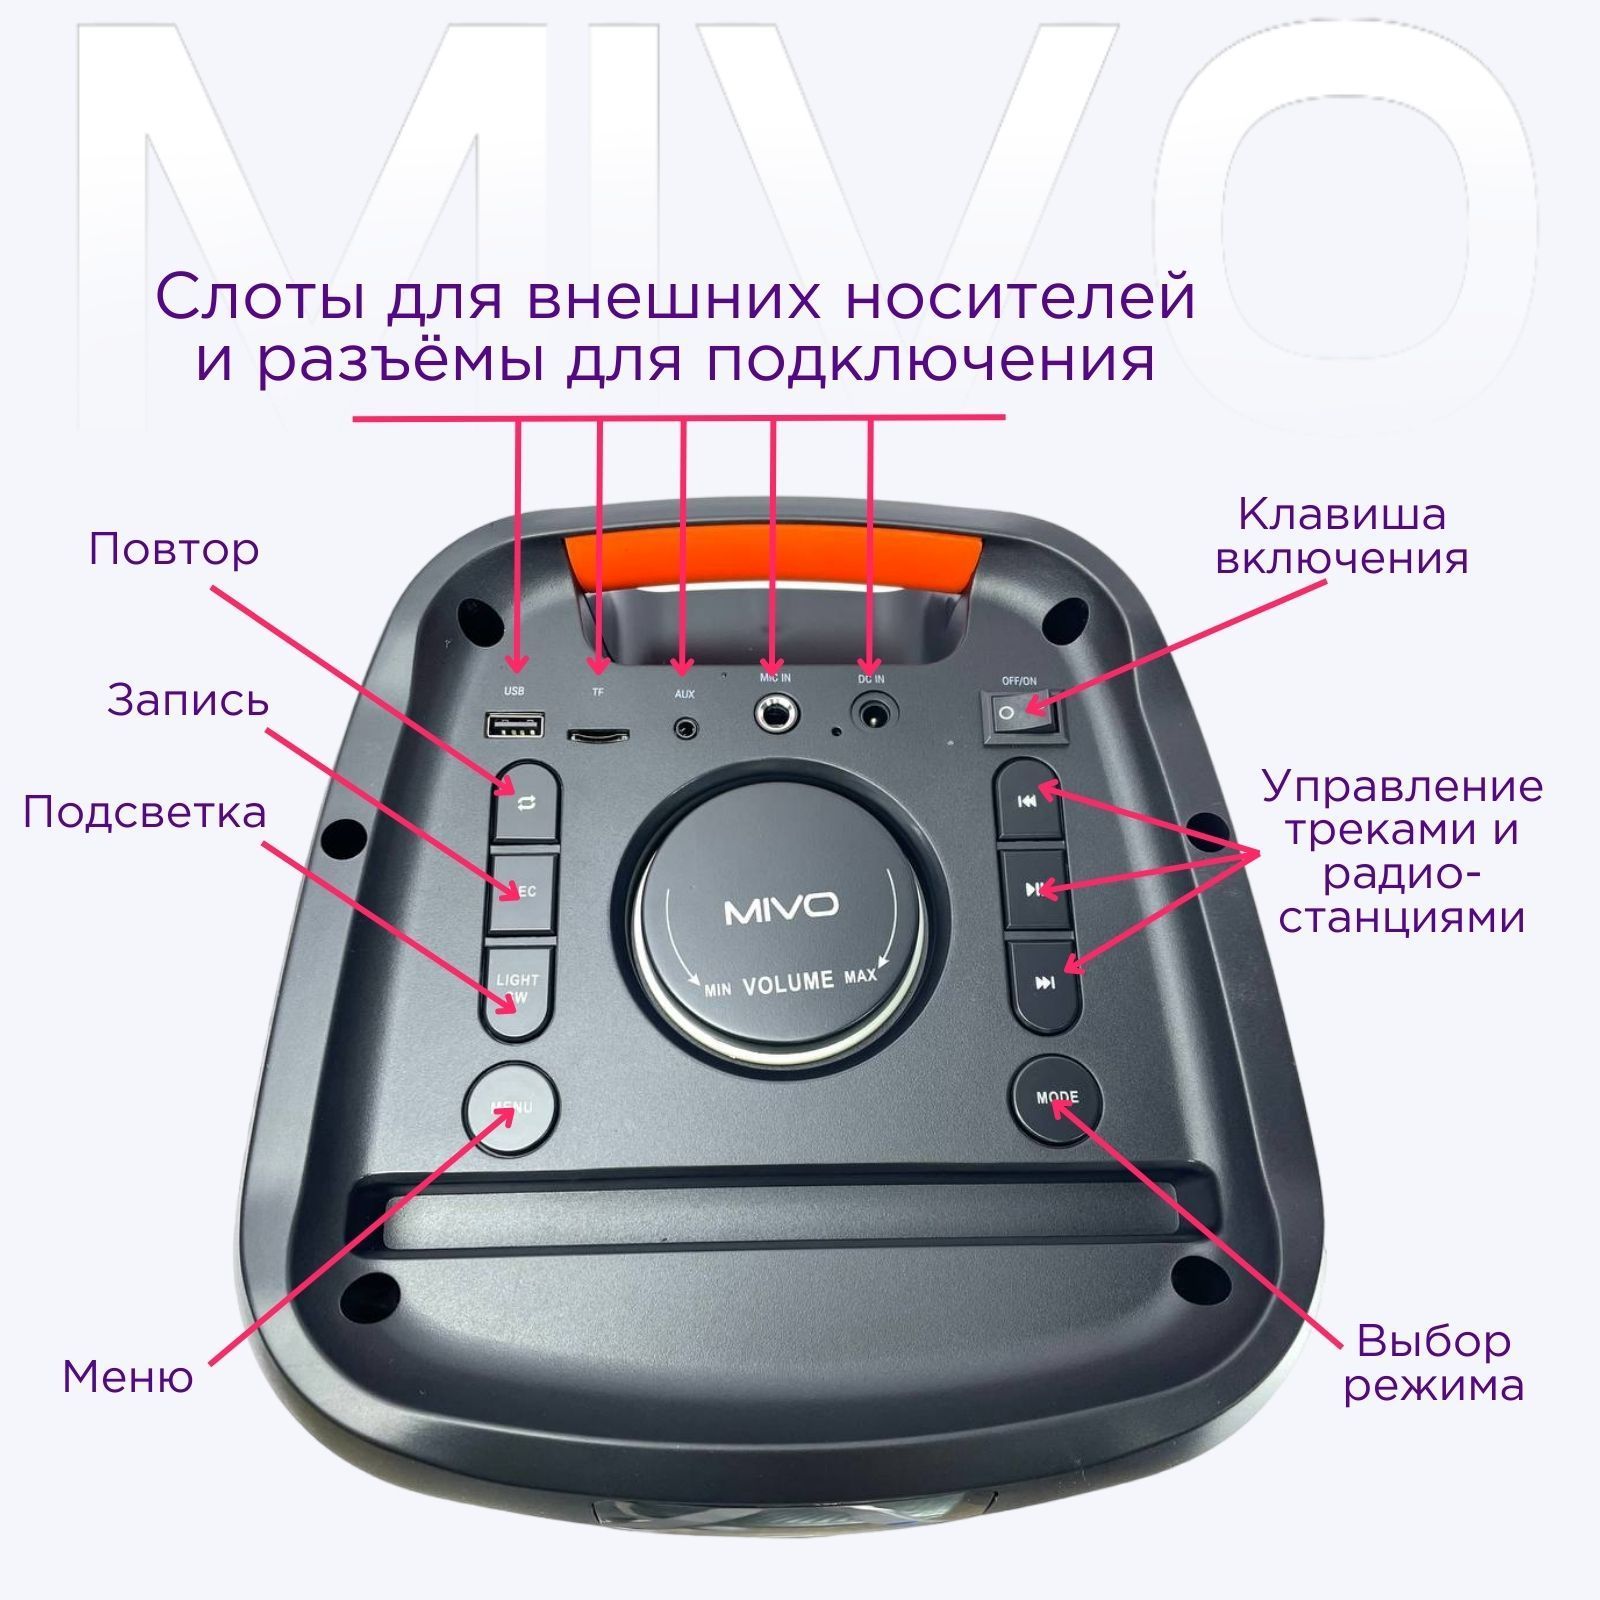 Mivo 650. Bluetooth-колонка Mivo MD-652. Mivo MD-650. Плата управления колонки блютуз Mivo m06. Колонка Mivo не подключается.